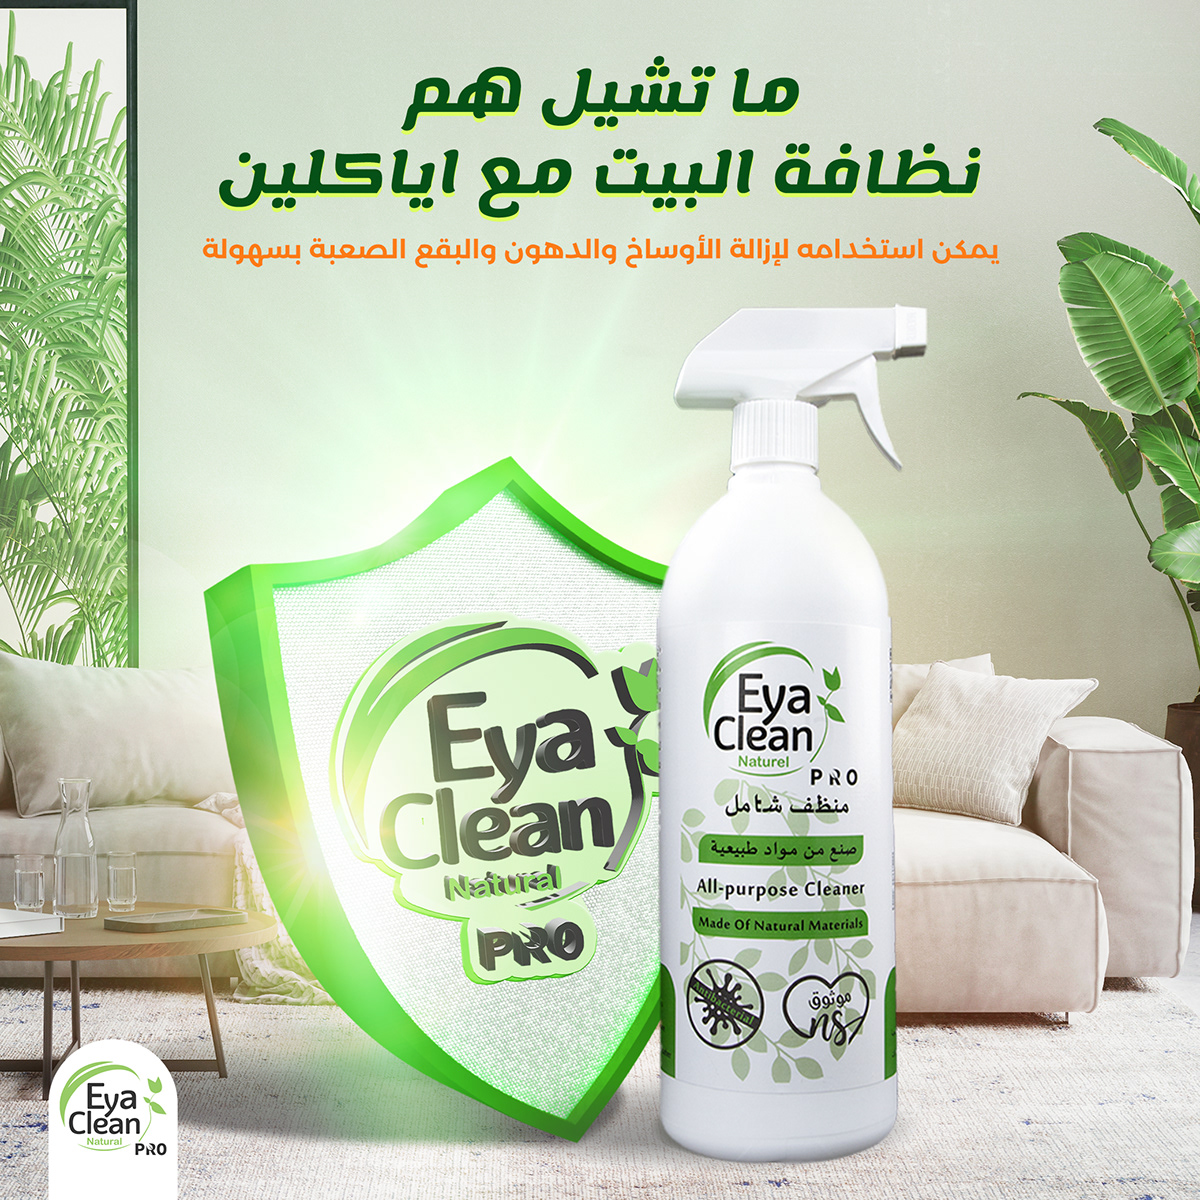 clean Clean Design print design  social media KSA egypt Qatar Turkey UAE adsoftheworld